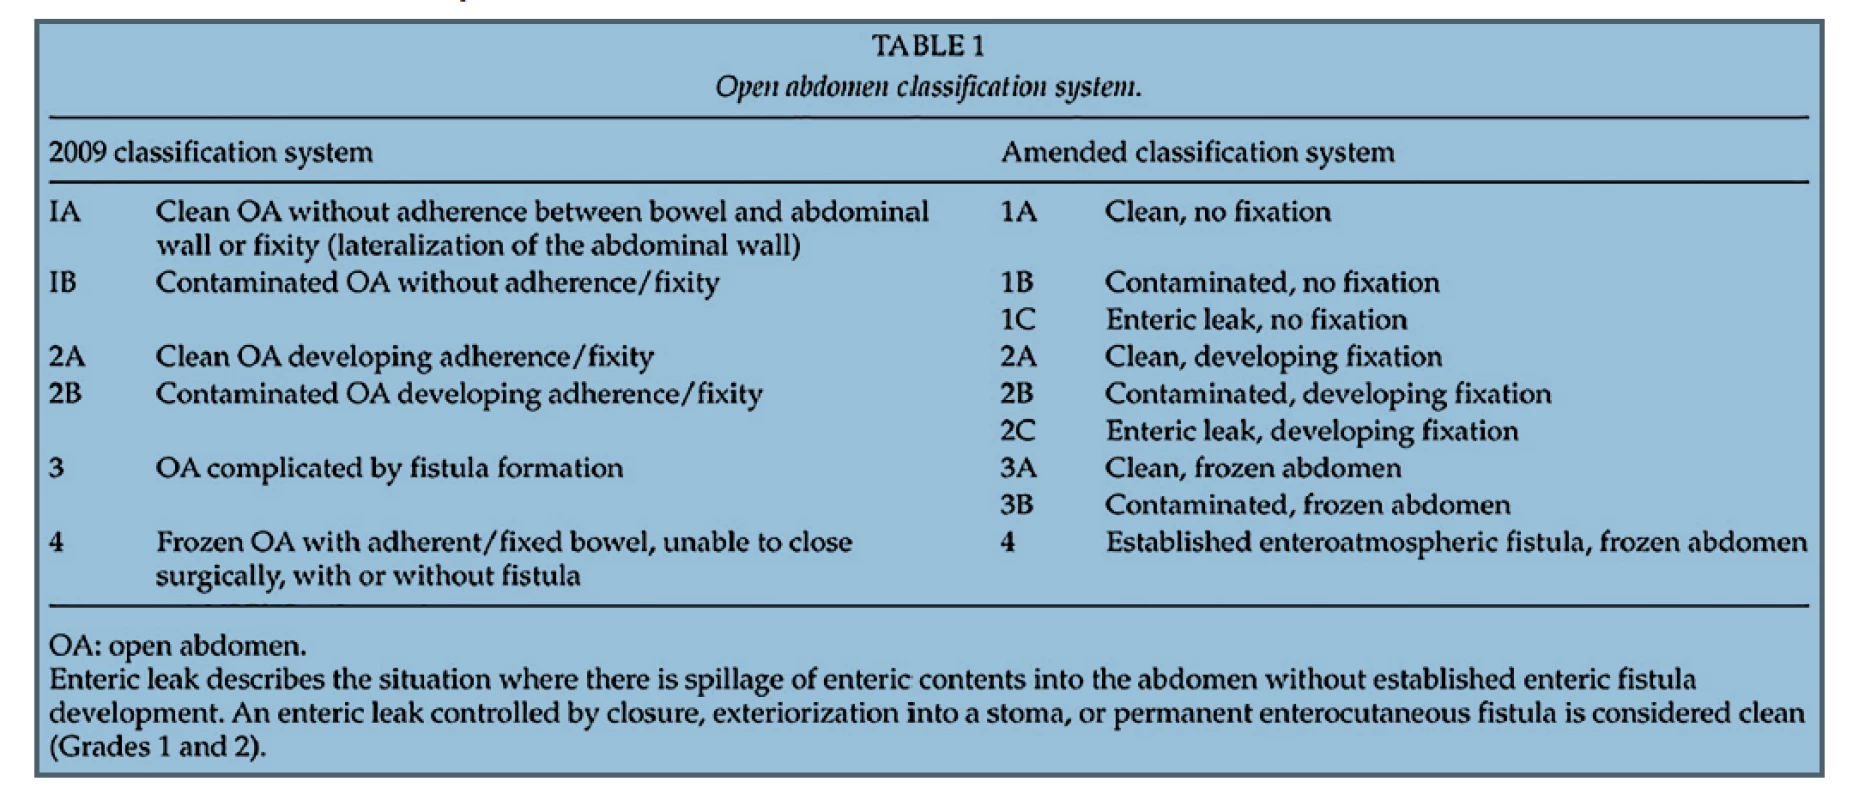 Klasifikace open abdomen [2]<br>
Tab. 1: Classification of the open abdomen [2]